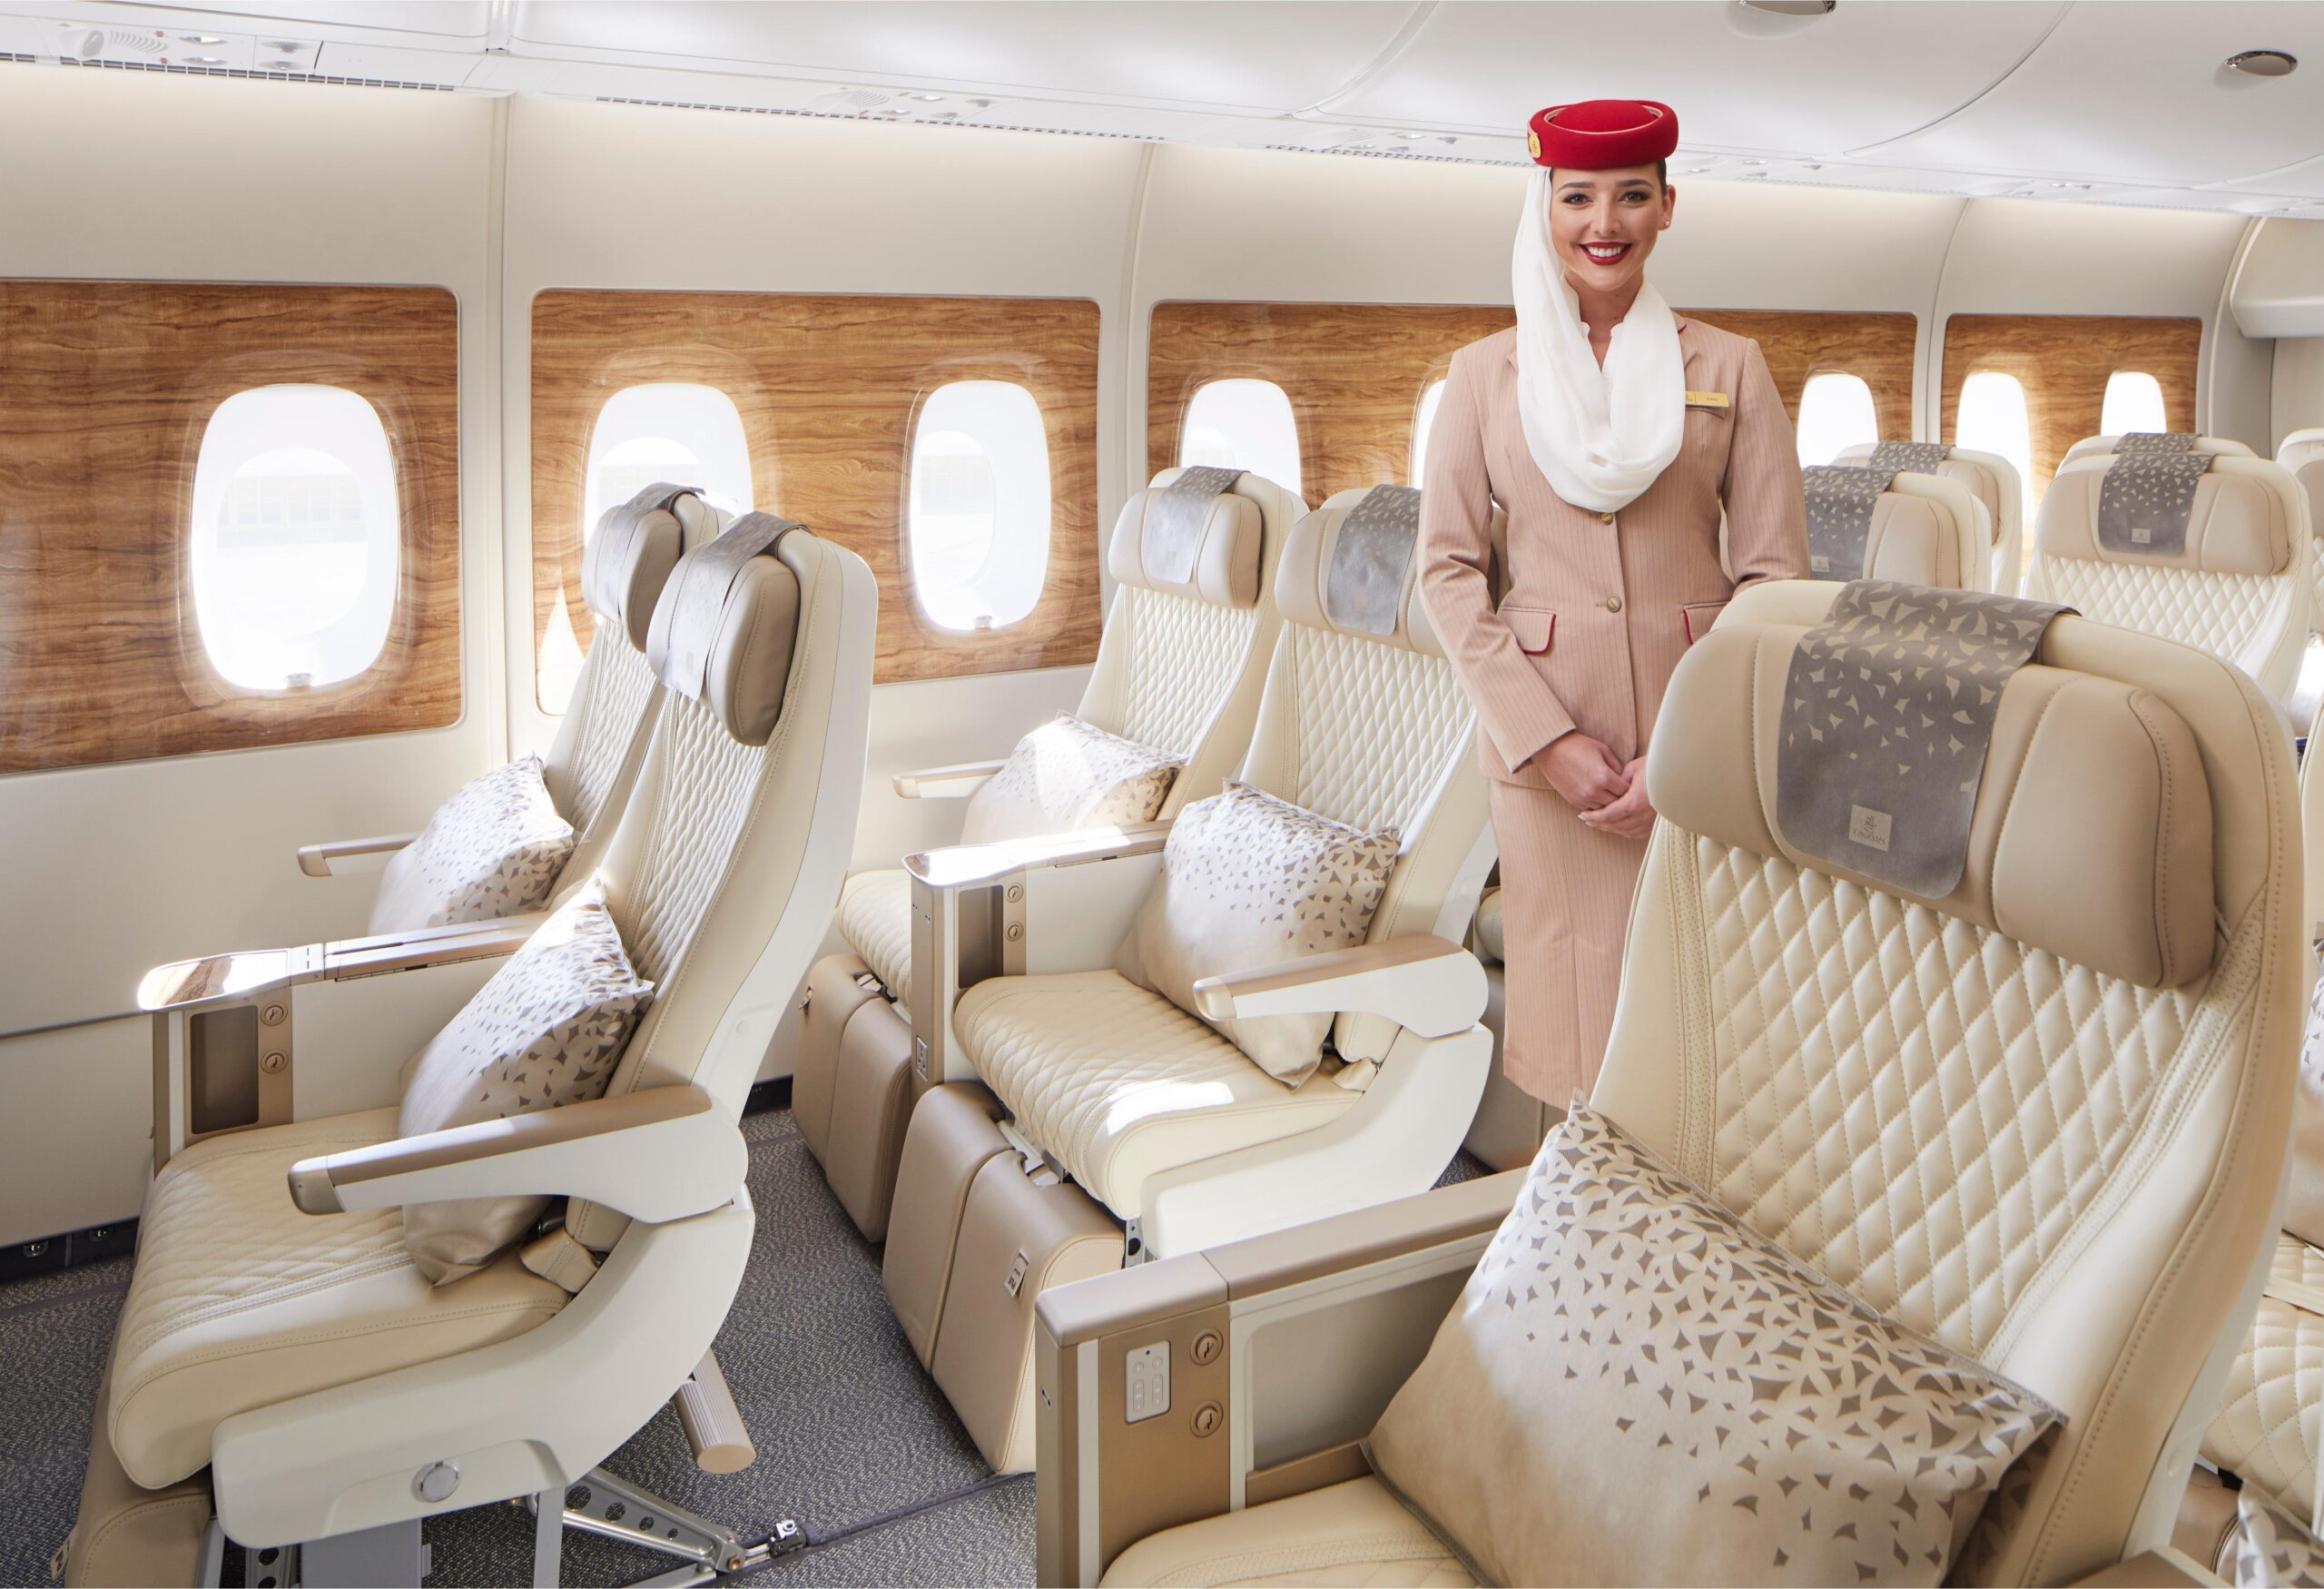 Discover the new Emirates premium economy seats in its recent Airbus